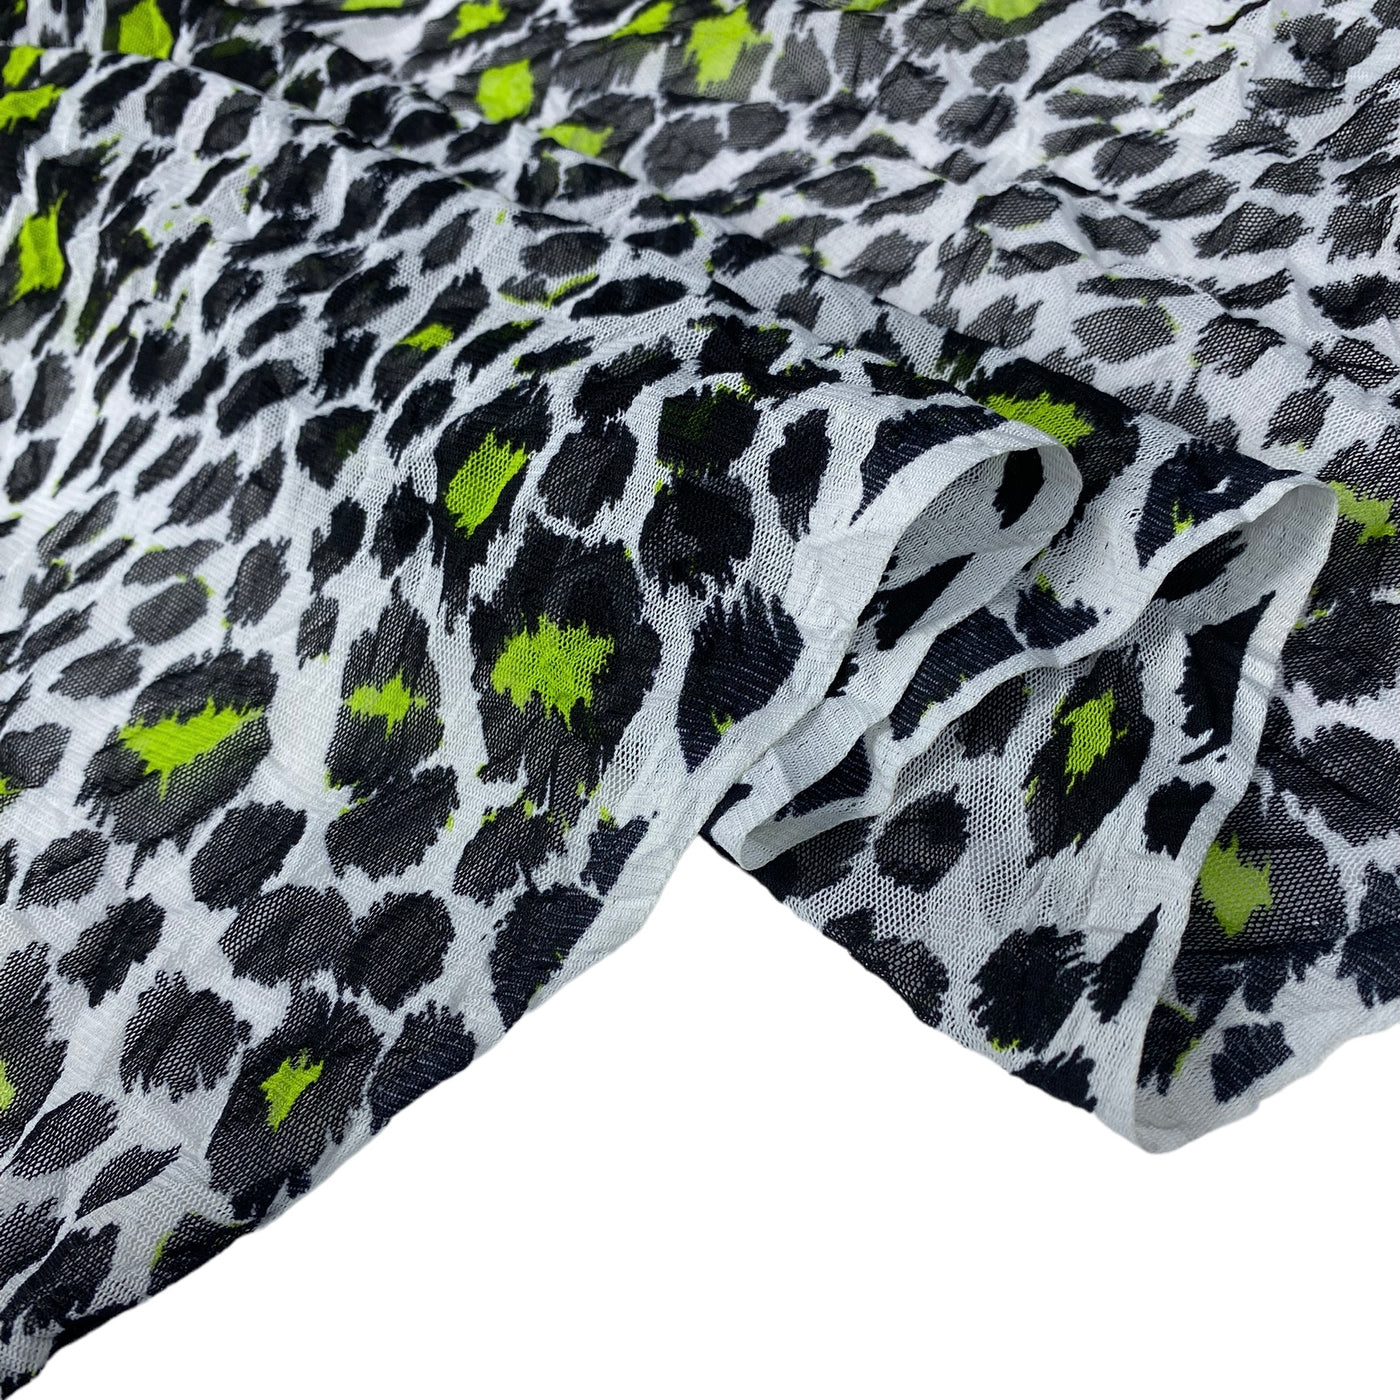 Printed Stretch Mesh - Cheetah - White/Black/Green